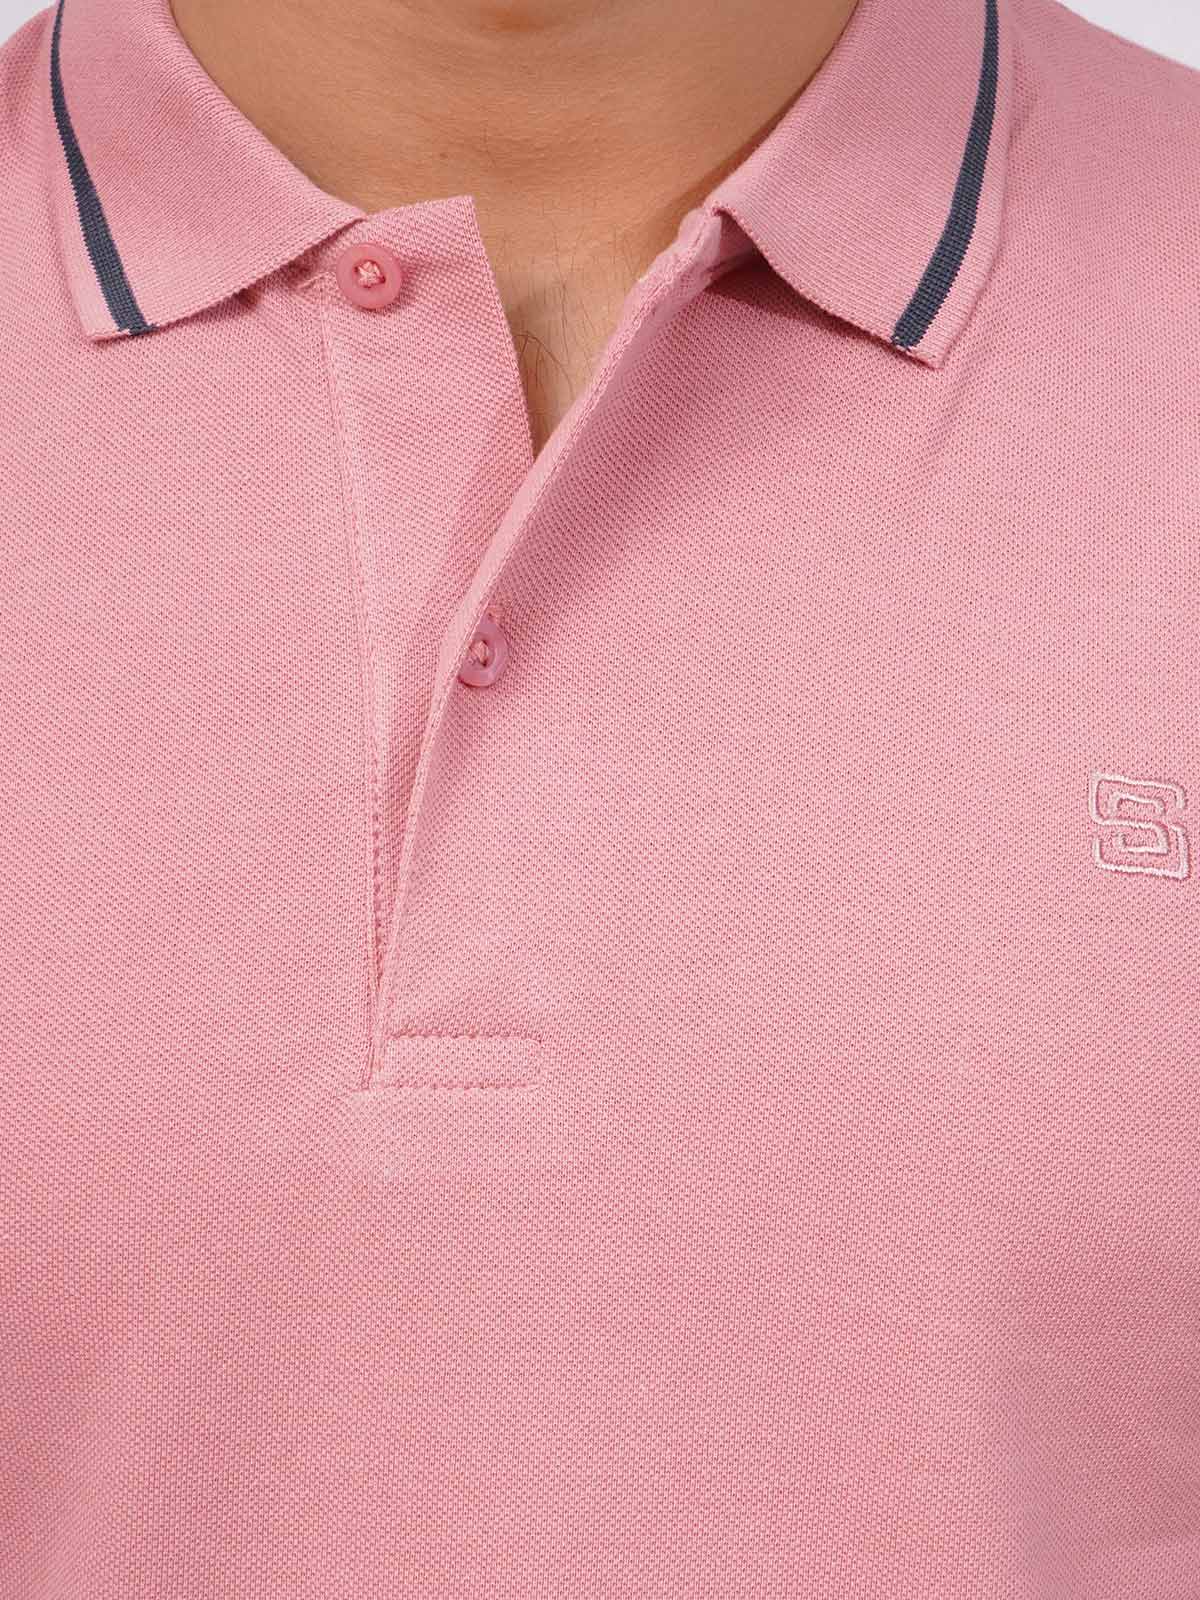 Jan Rose Classic Half Sleeves Cotton Polo T-Shirt (POLO-660)